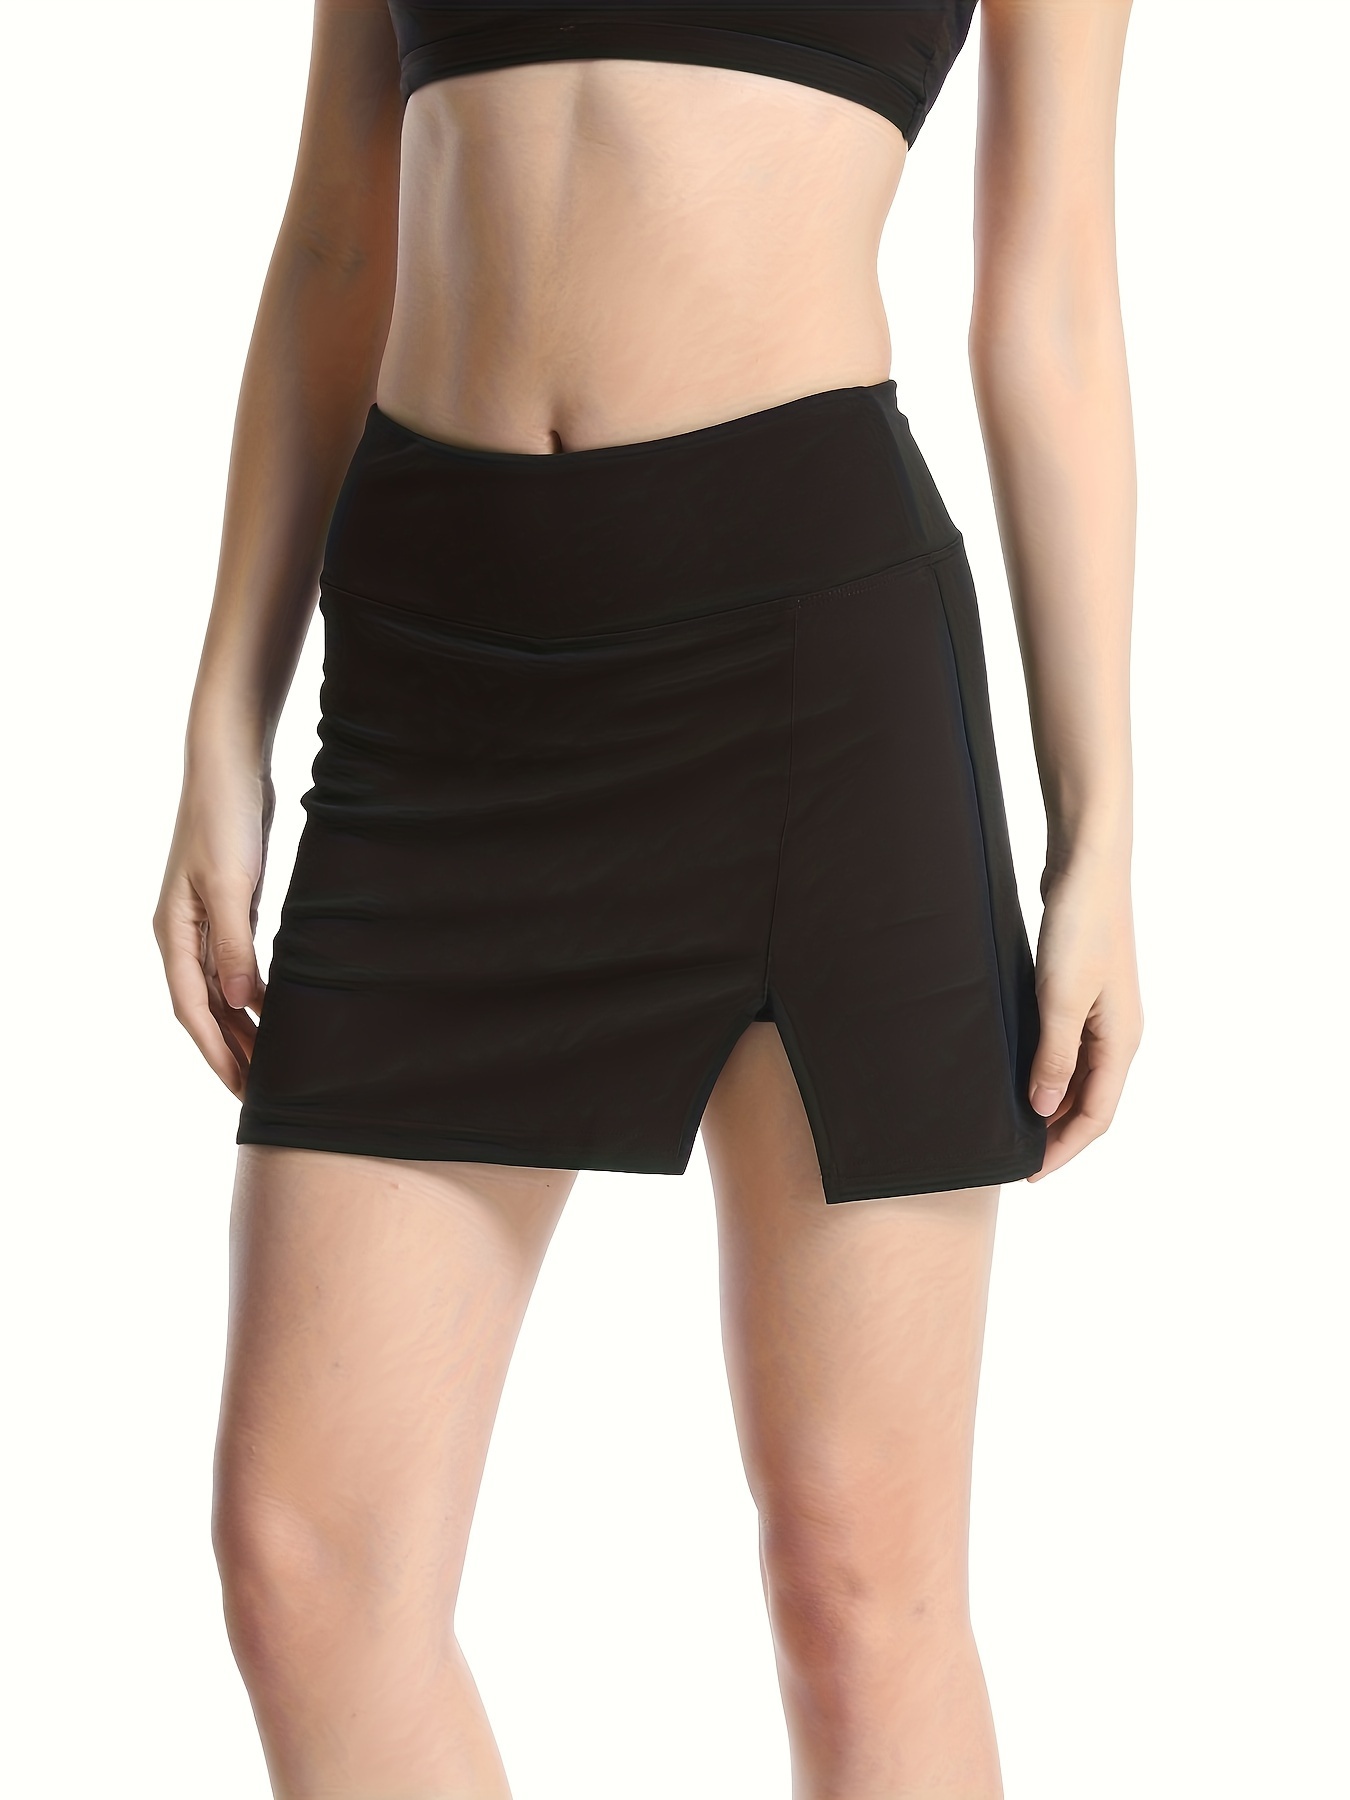 split hem sports skorts with pocket solid color running active skirts for golf tennis womens activewear